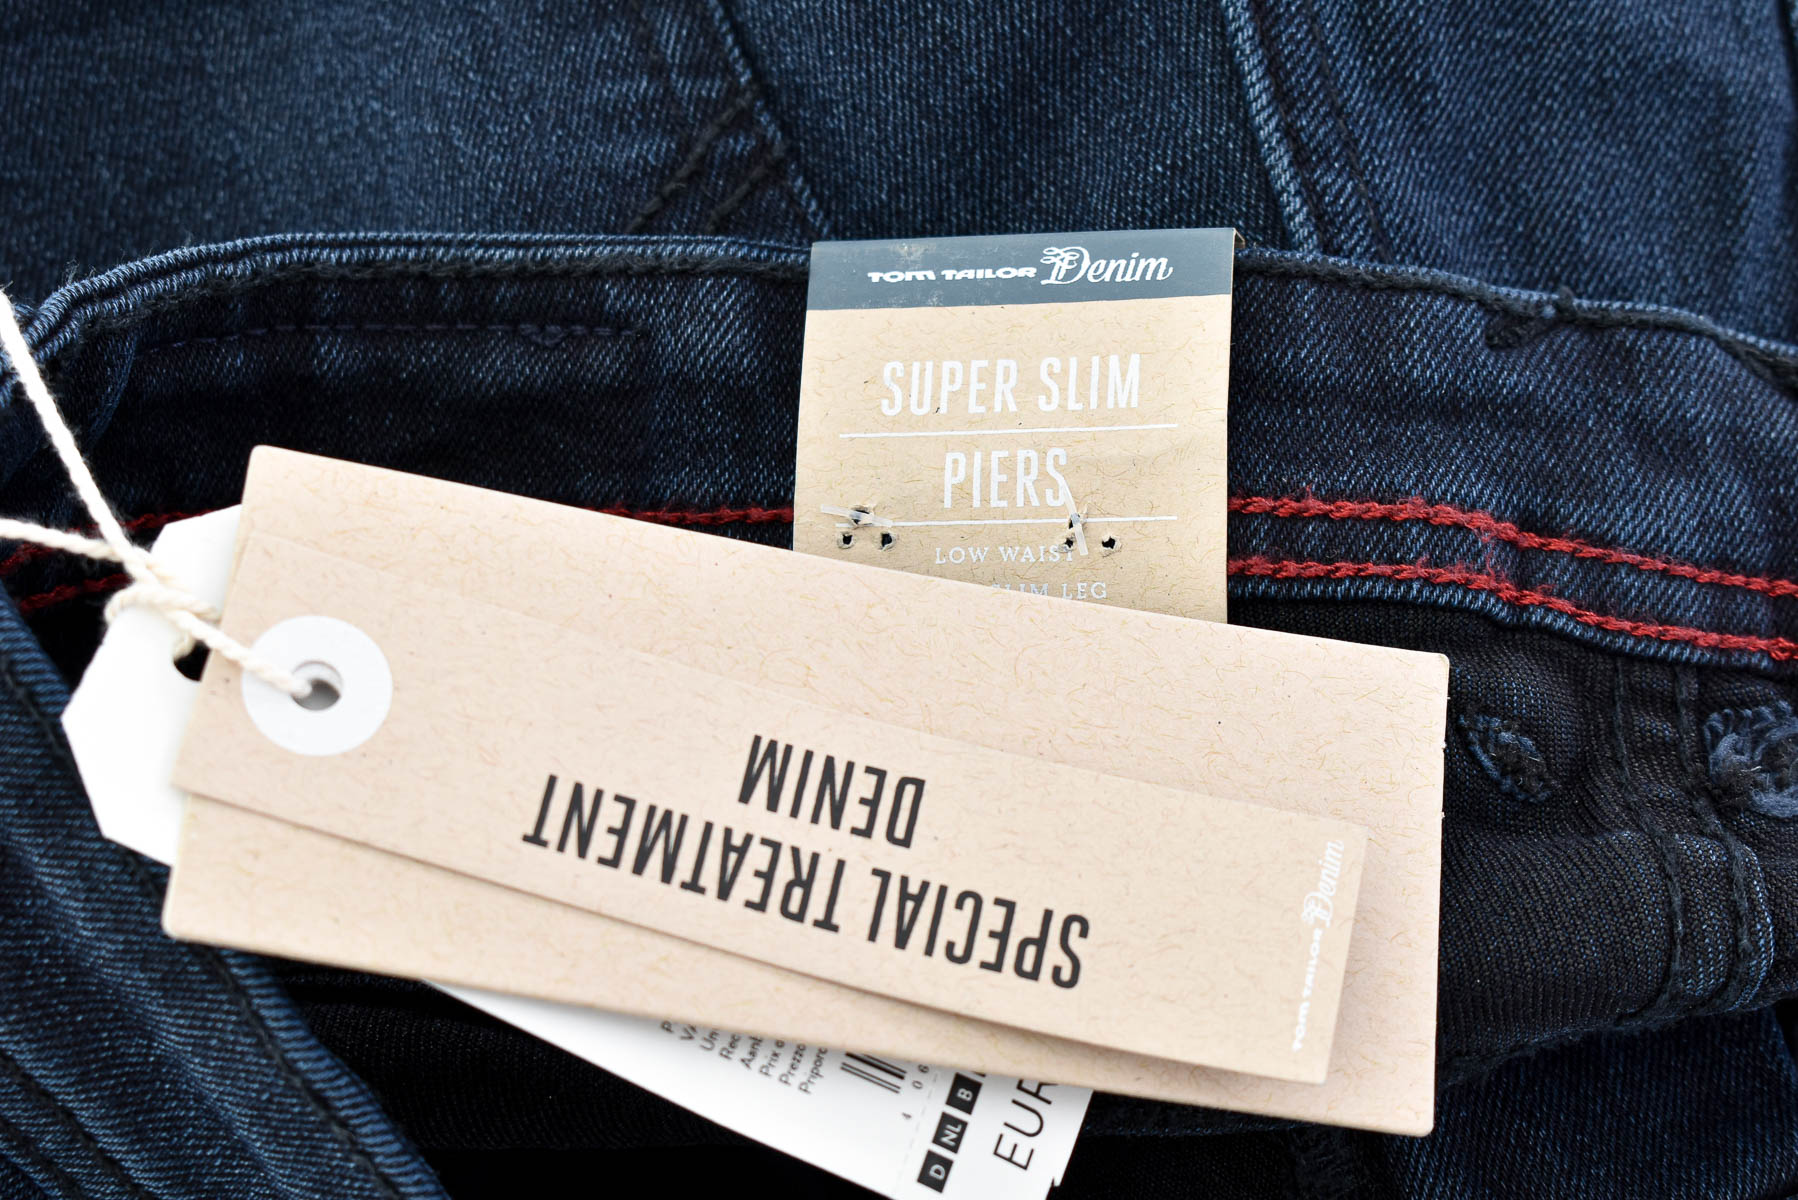 Men's jeans - TOM TAILOR Denim - 2